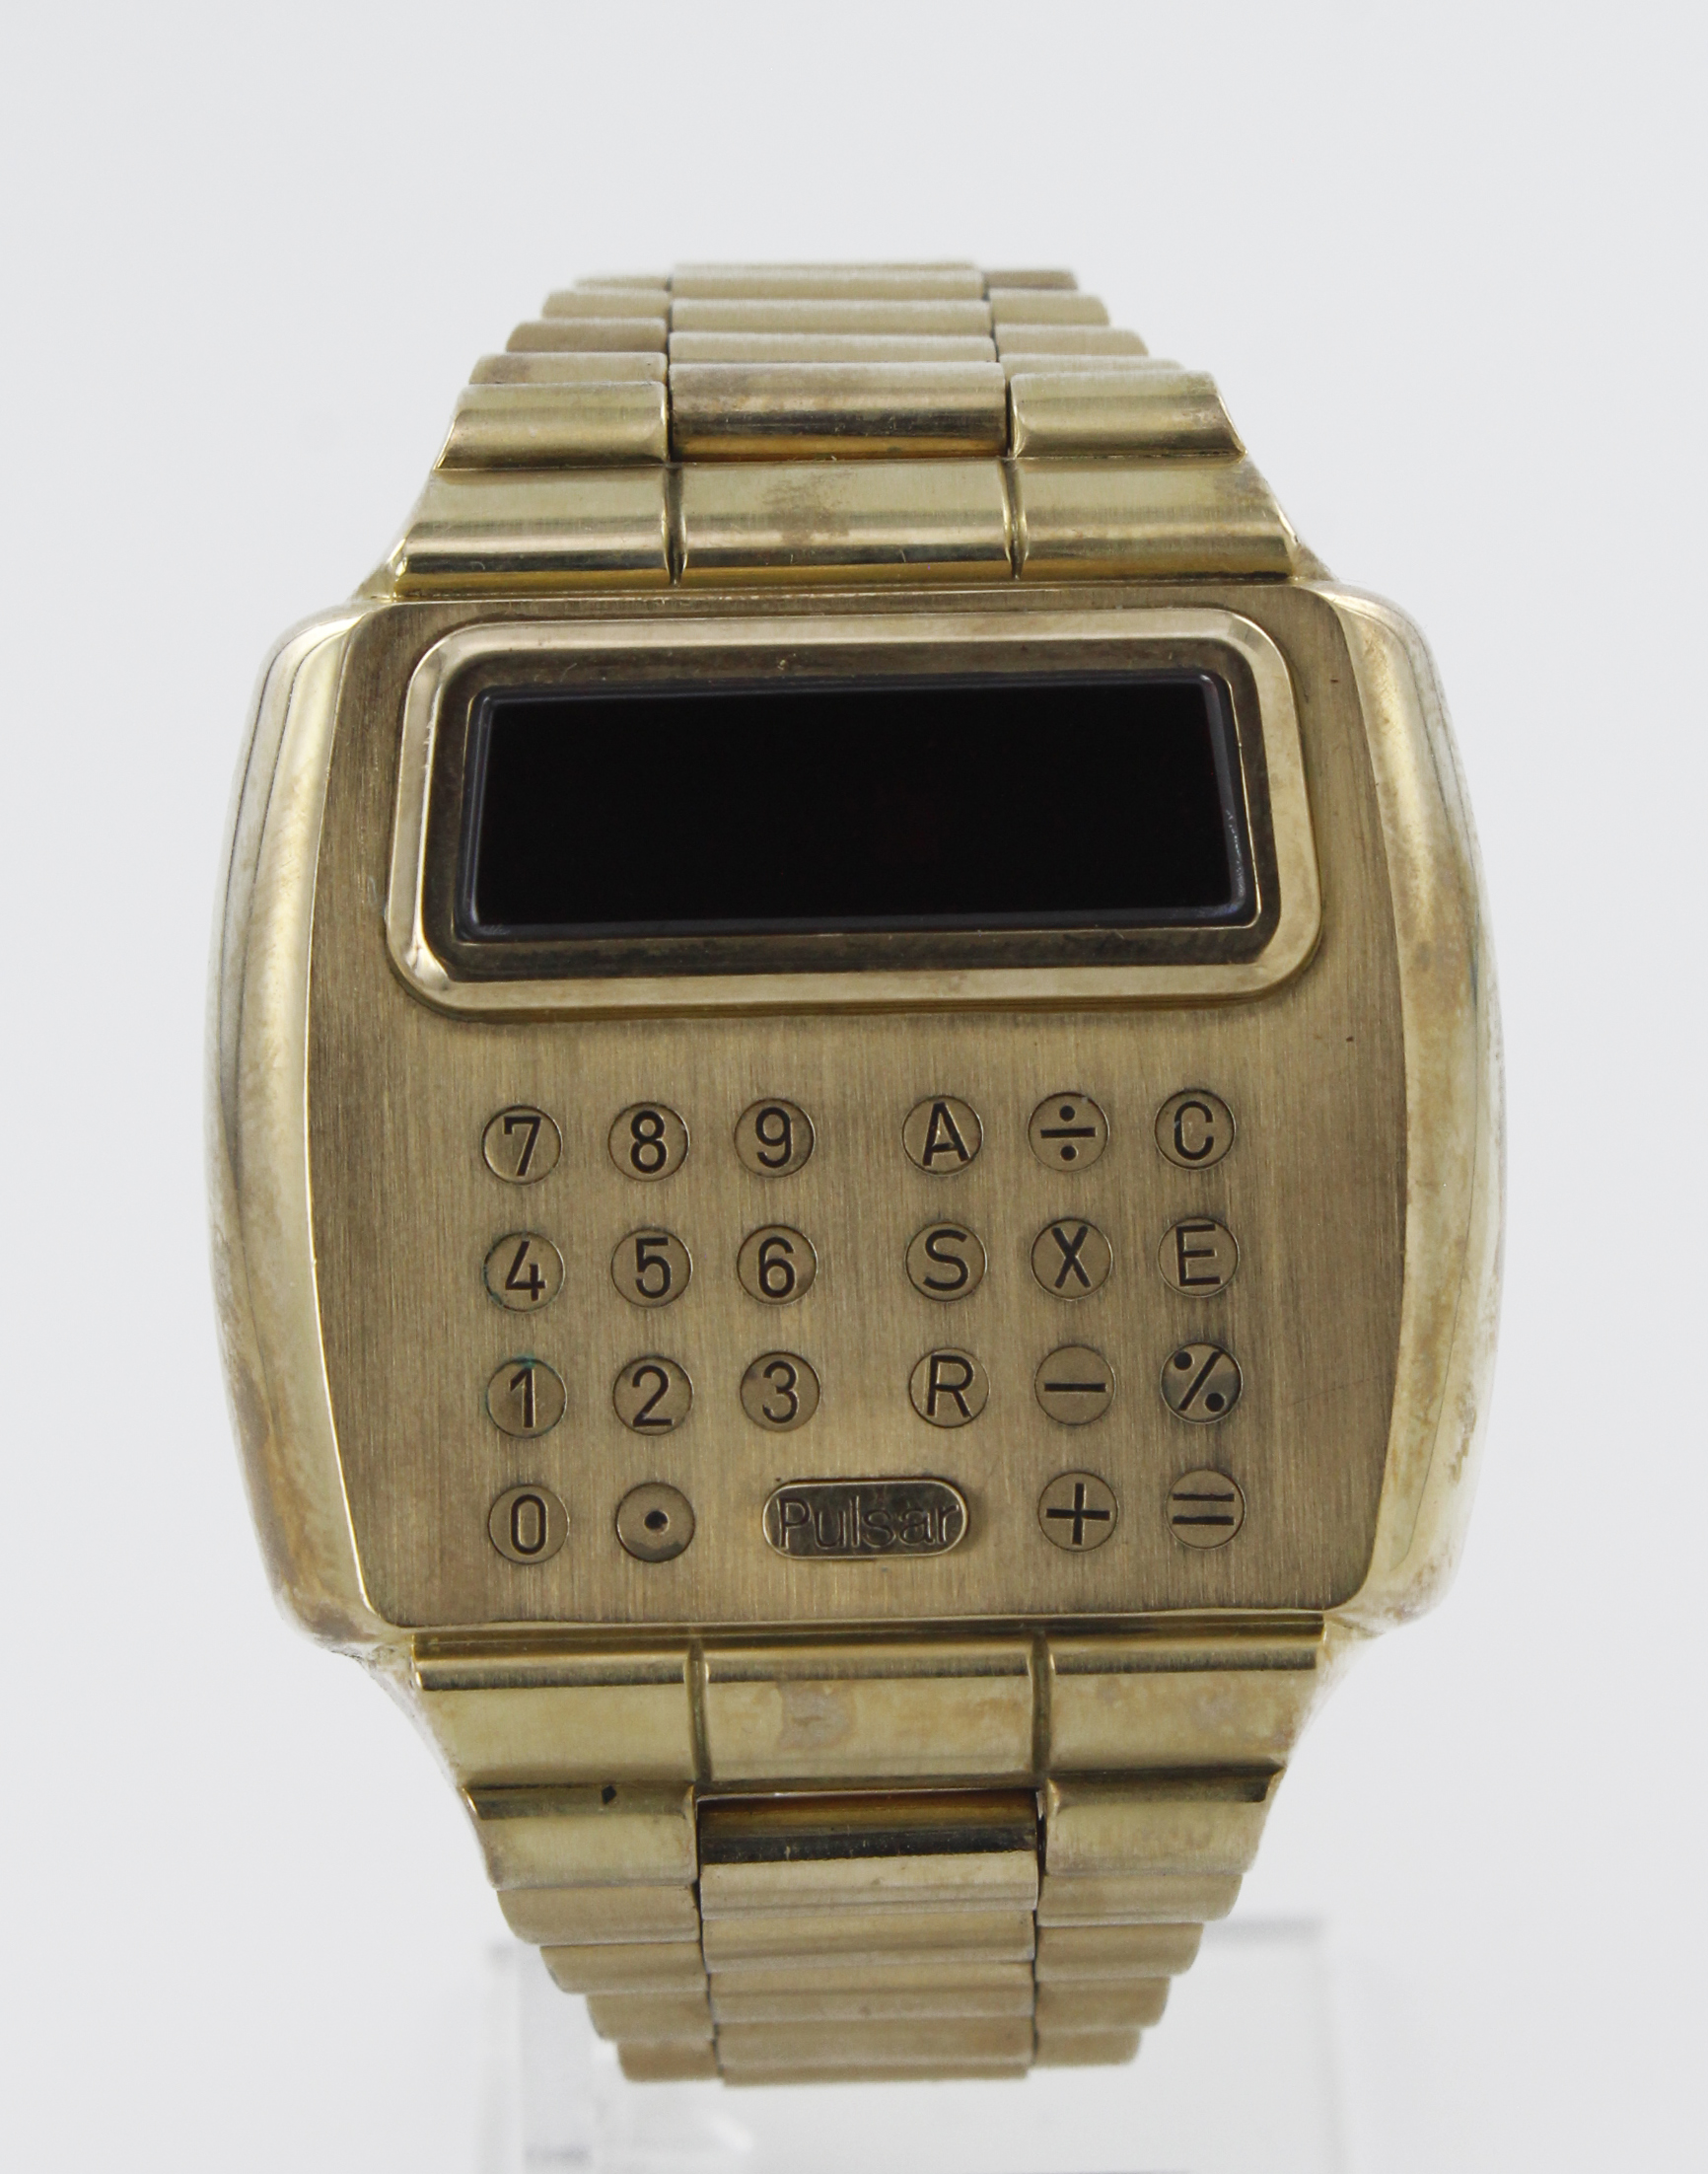 Gents 14k gold filled Pulsar Time Computer Calculator quartz wristwatch, circa 1970s. The gold